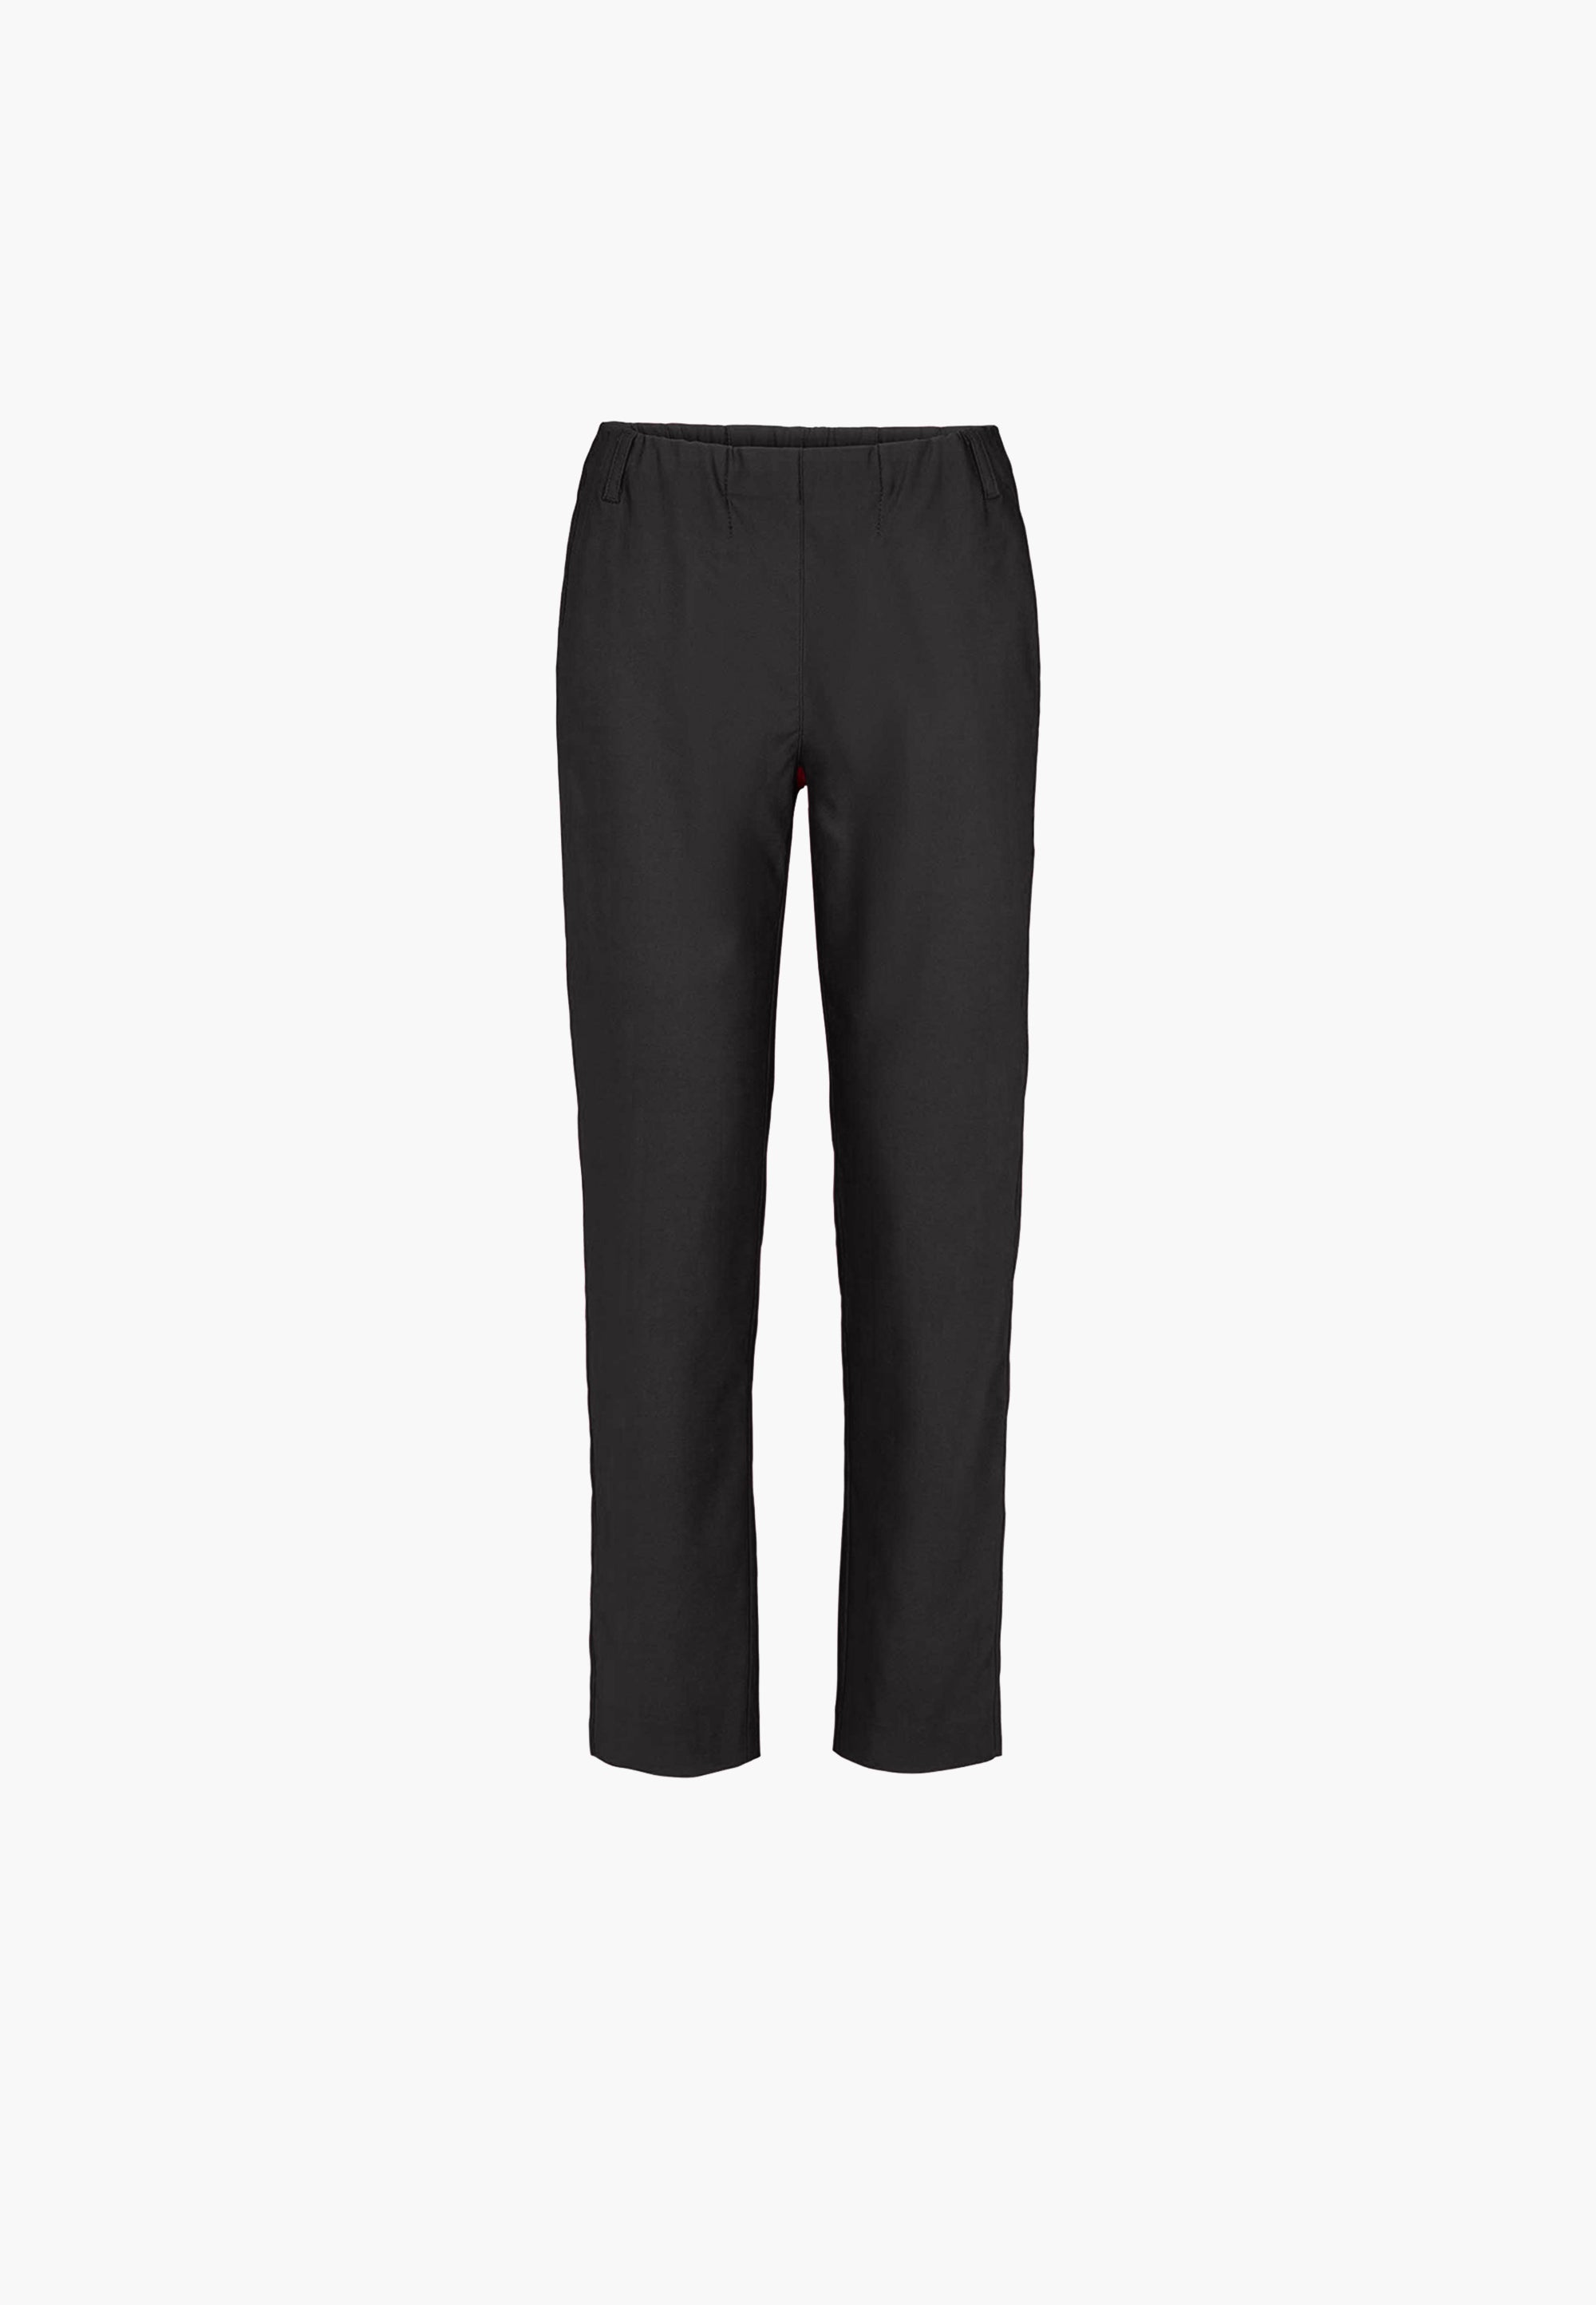 LAURIE  Taylor Regular - Short Length Trousers REGULAR 99000 Black